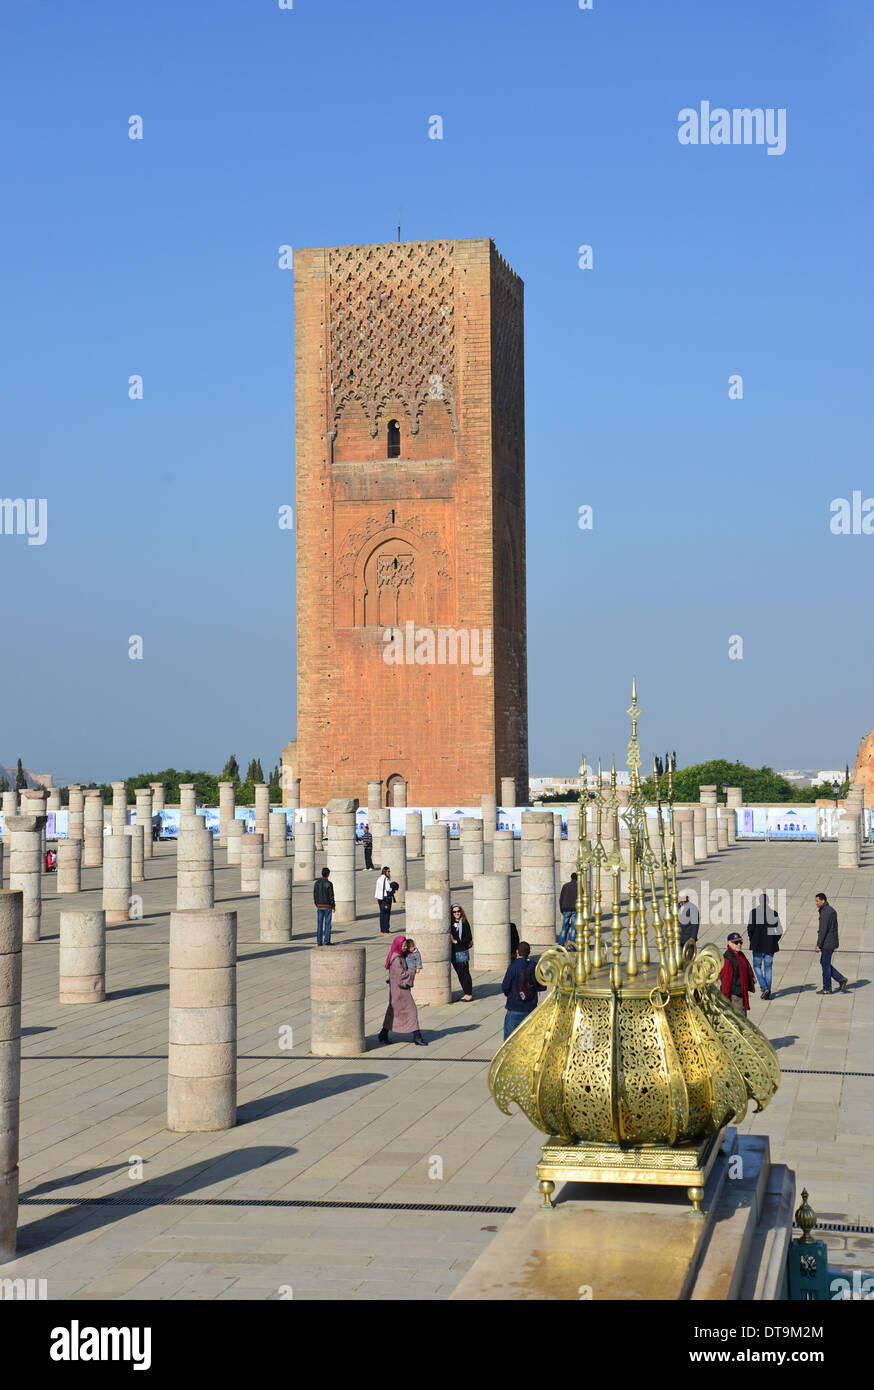 Torre Hassan (Tour Hassan), Boulevard Mohamed Lyazidi, Rabat, Rabat-Salé-Zemmour-Zaer regione, il Regno del Marocco Foto Stock